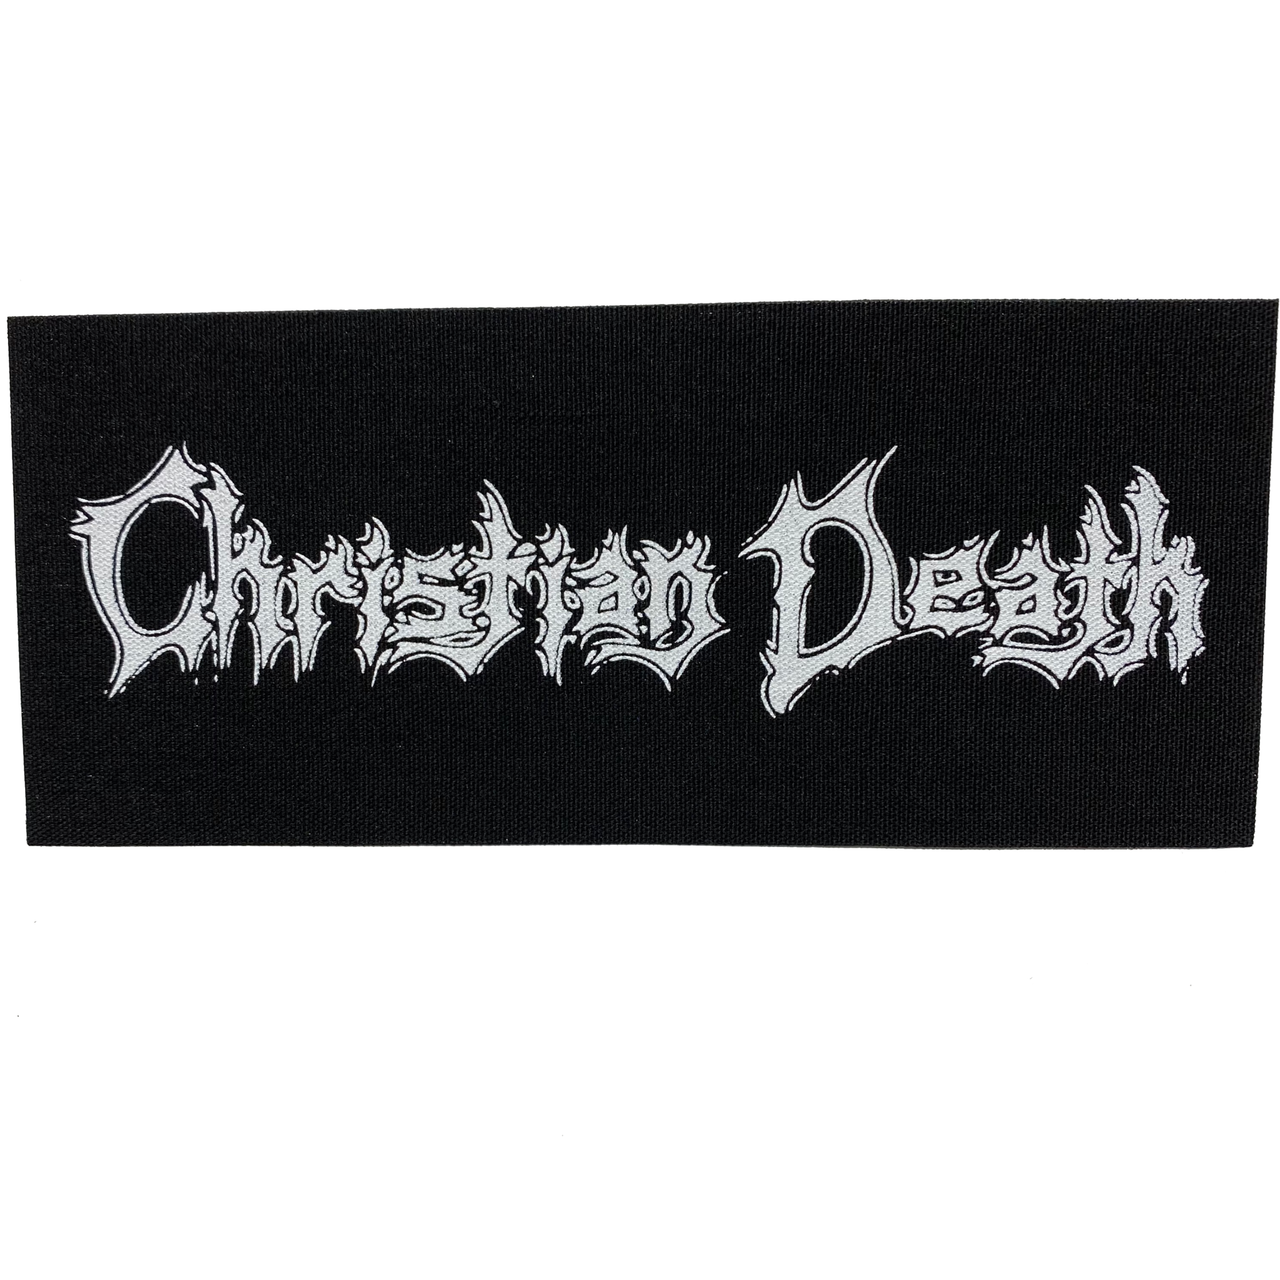 Christian Death Cloth Patch